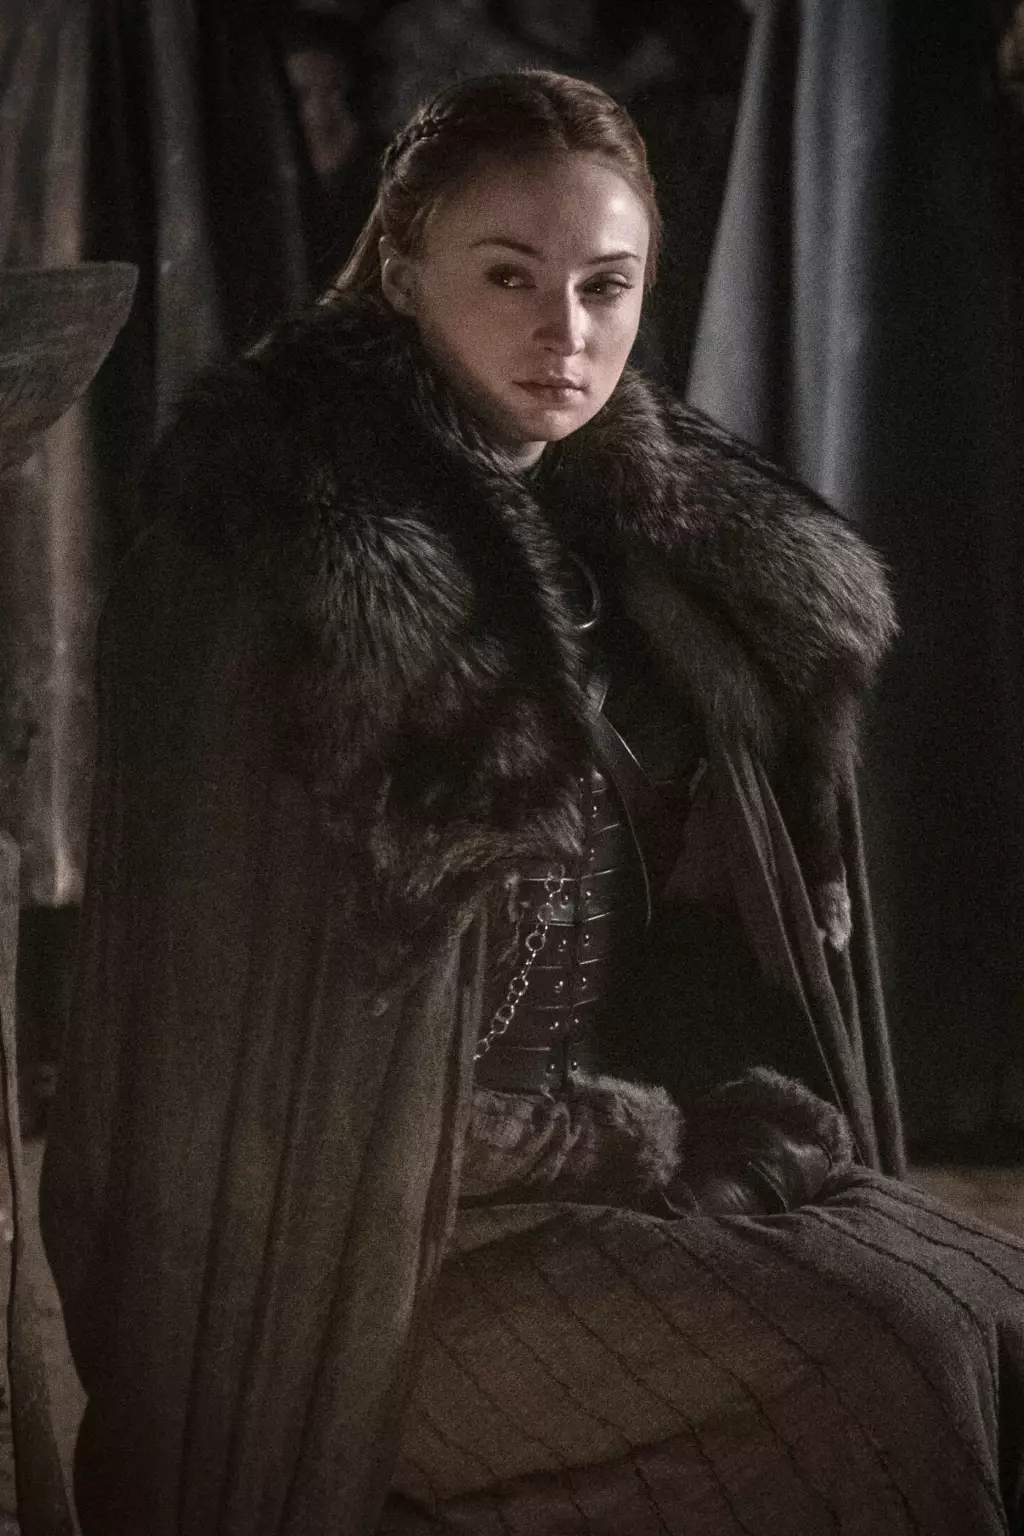 Sansa Stark, side-eye champ of the Seven Kingdoms.